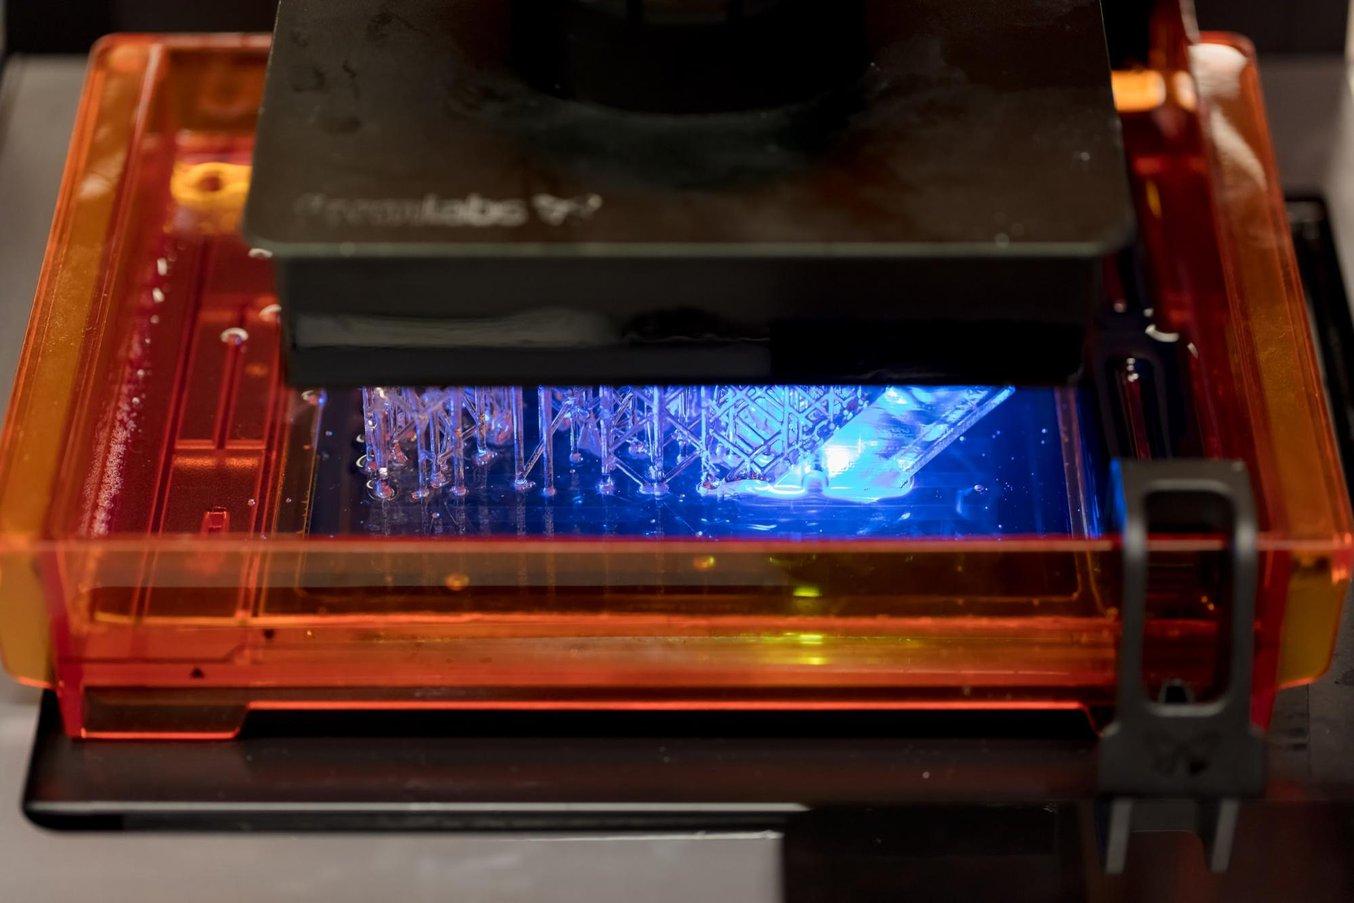 Resin 3D printer in action - laser